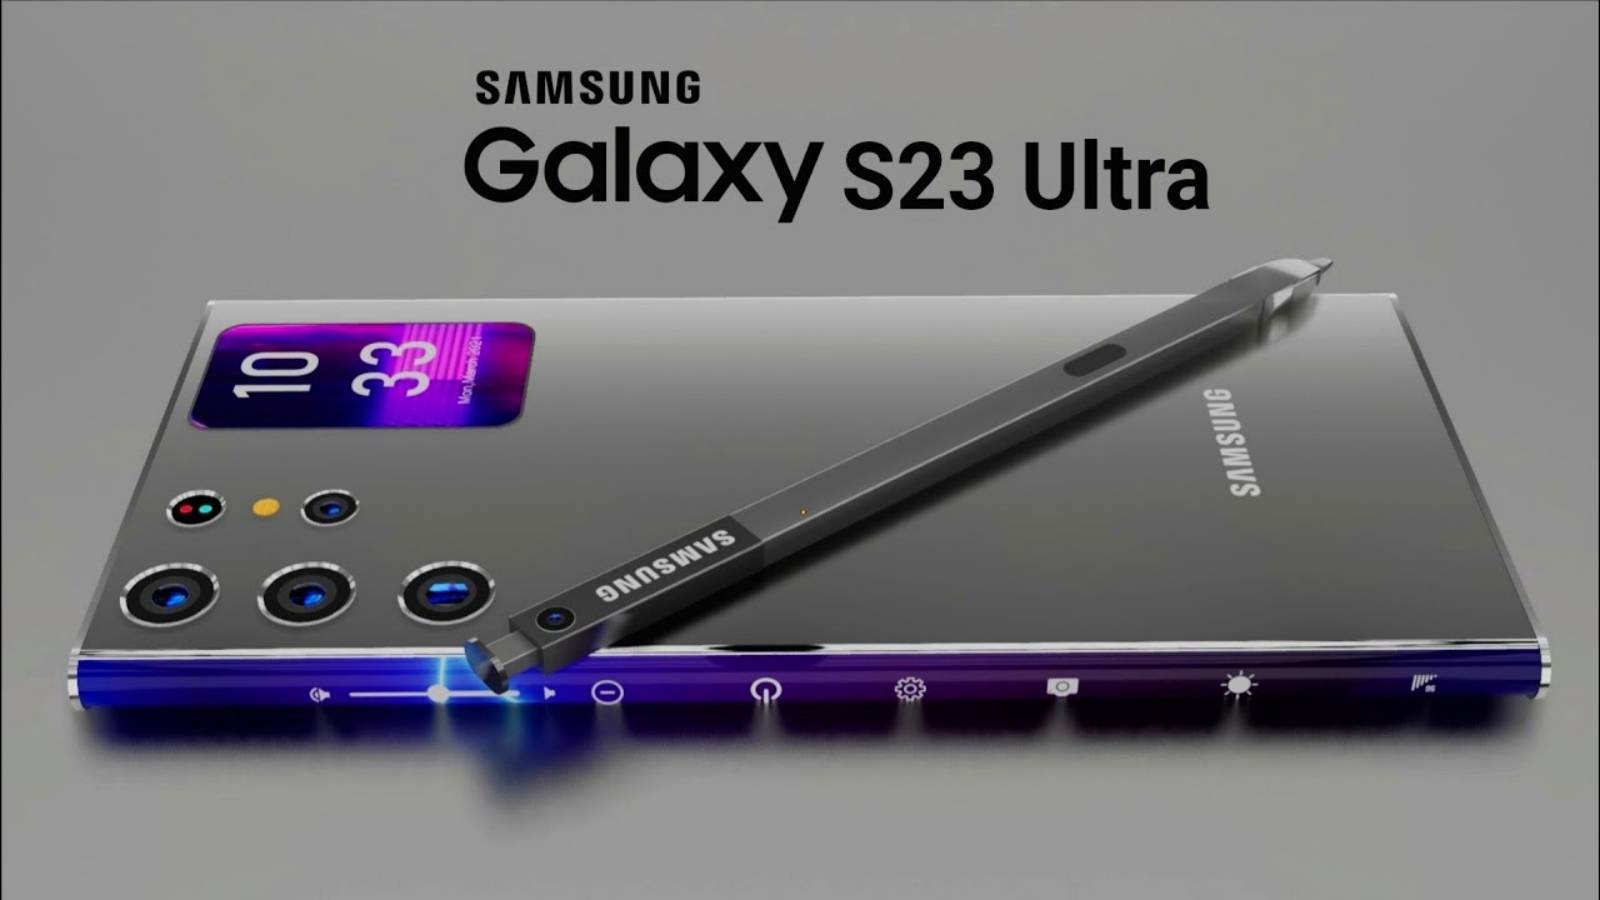 Samsung GALAXY S23 Vestea GROZAVA Schimbare MAJORA Telefon